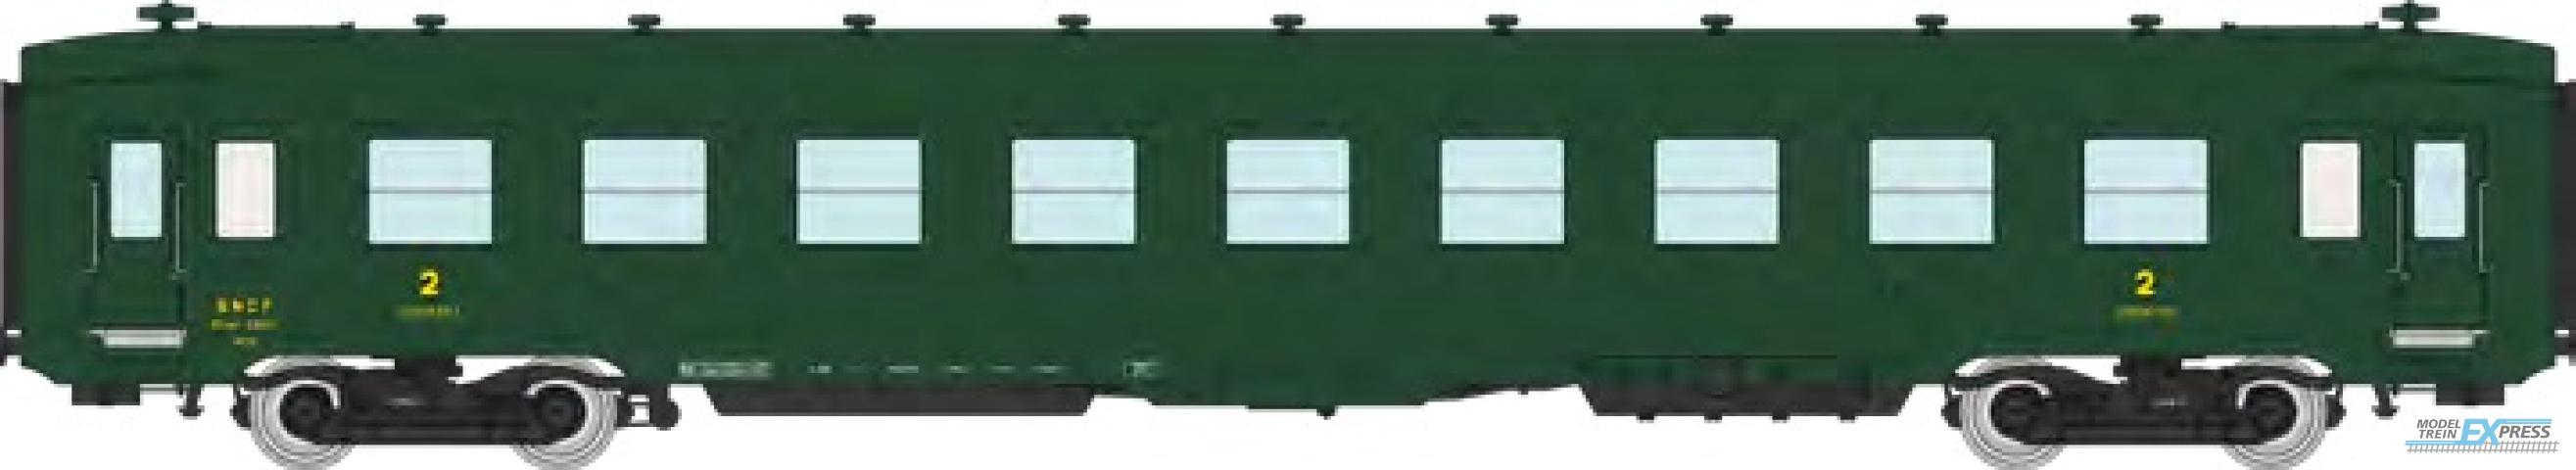 REE models VB-400 U52 DEV AO Sleeping Cars Green 306 2nd class B9c9 myfi 32012 Era III B